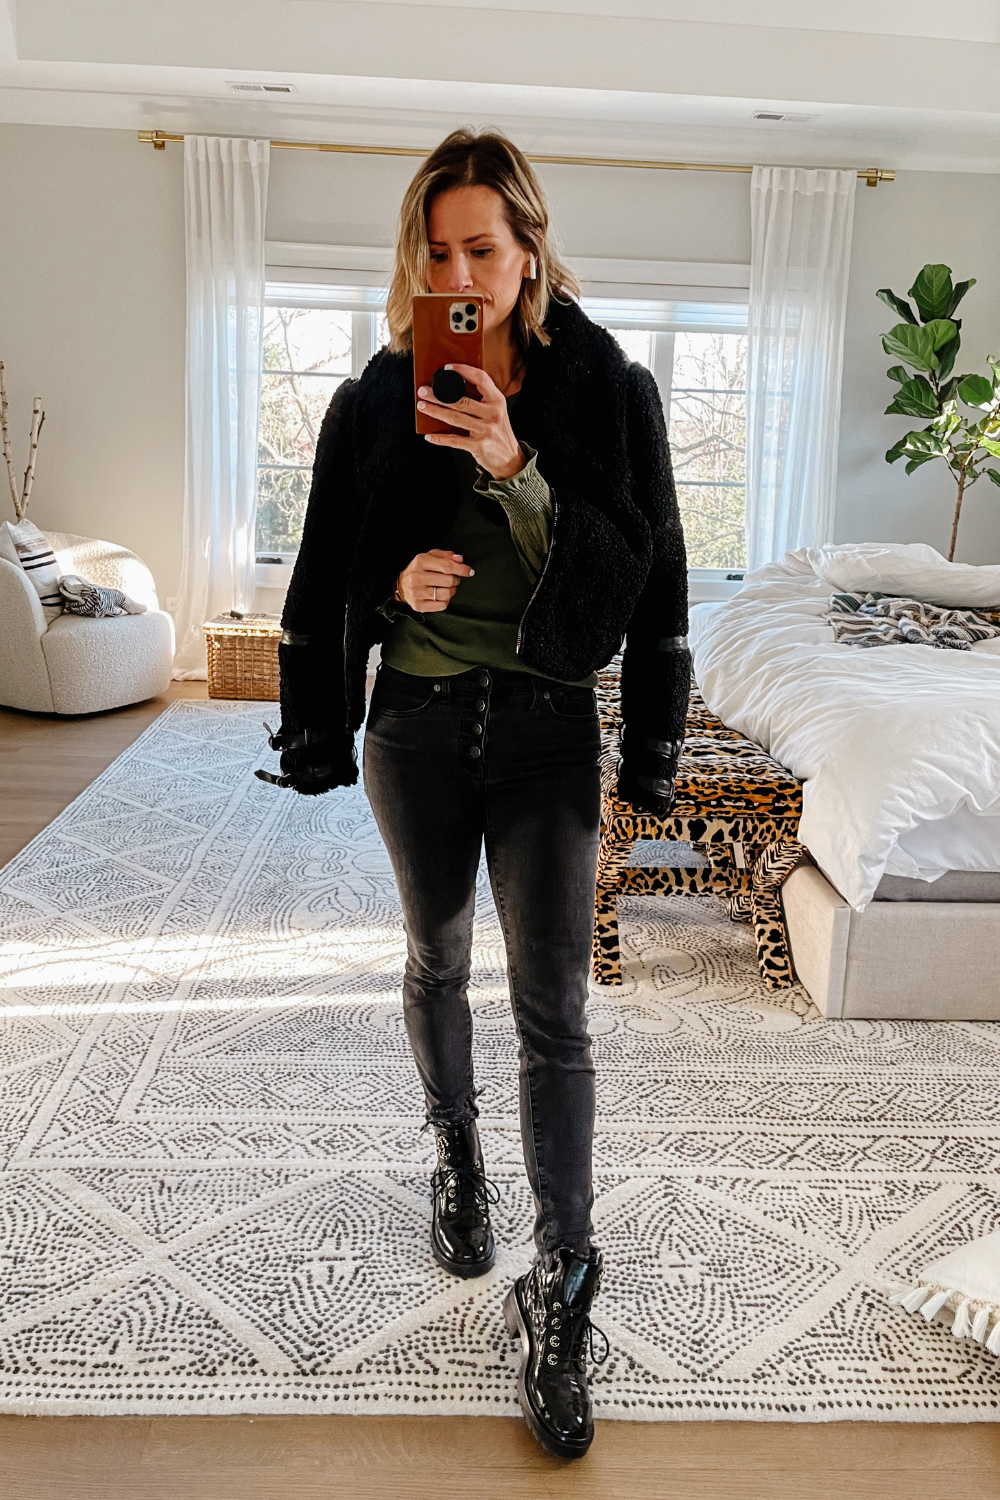 Suzanne wearing a faux fur jacket, black jeans, combat boots